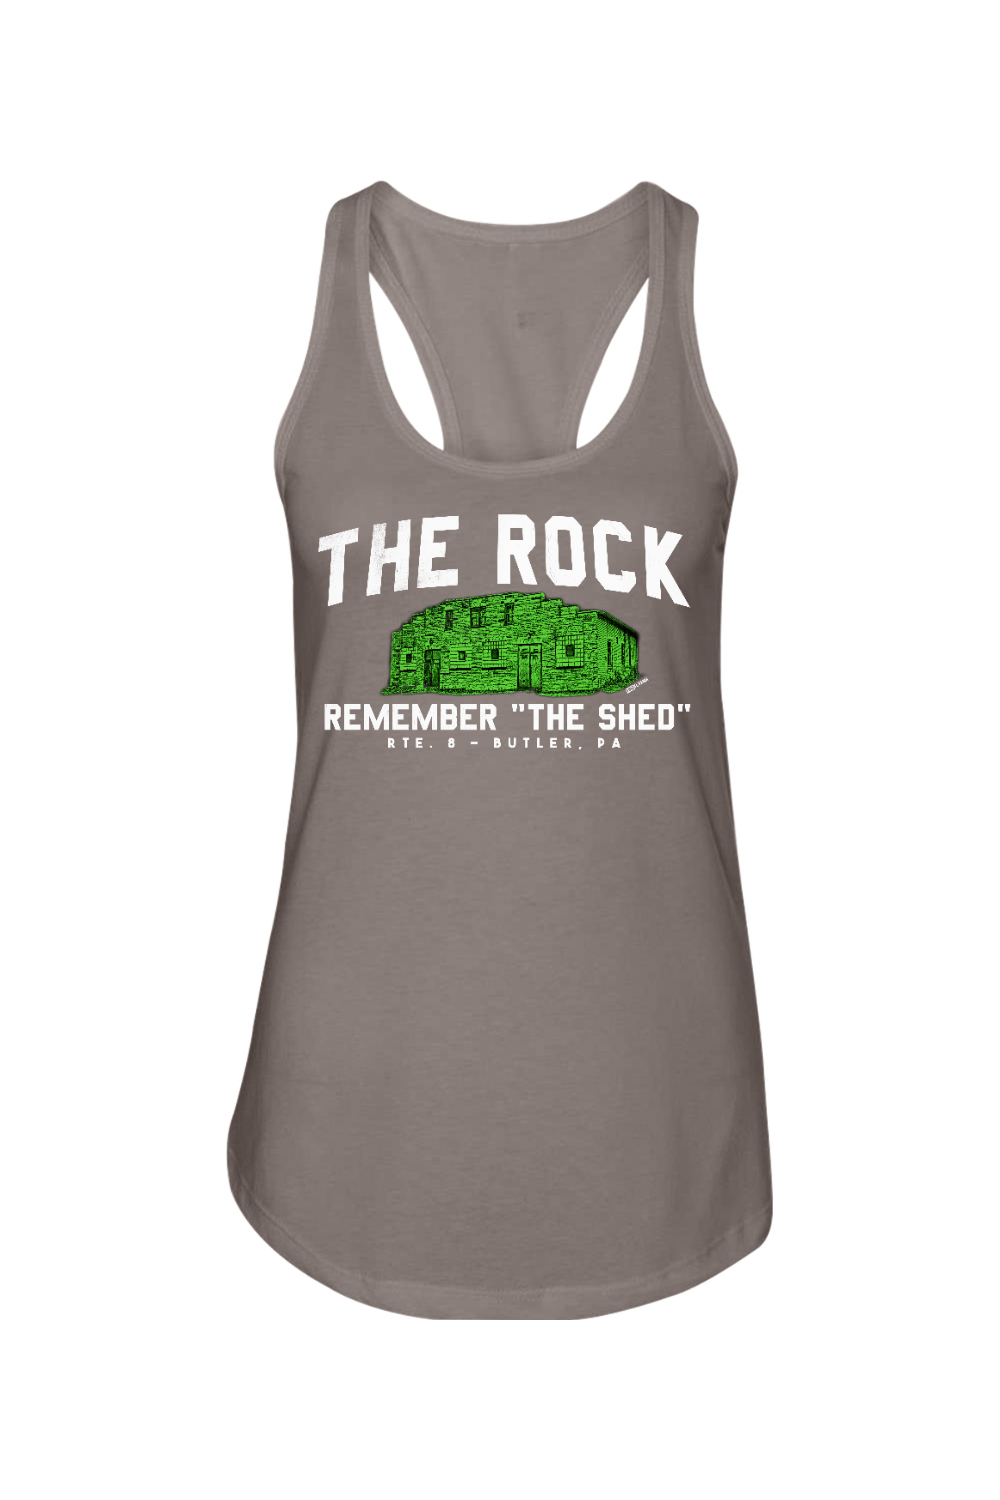 Remember the Shed - Slippery Rock - Ladies Racerback Tank - Yinzylvania